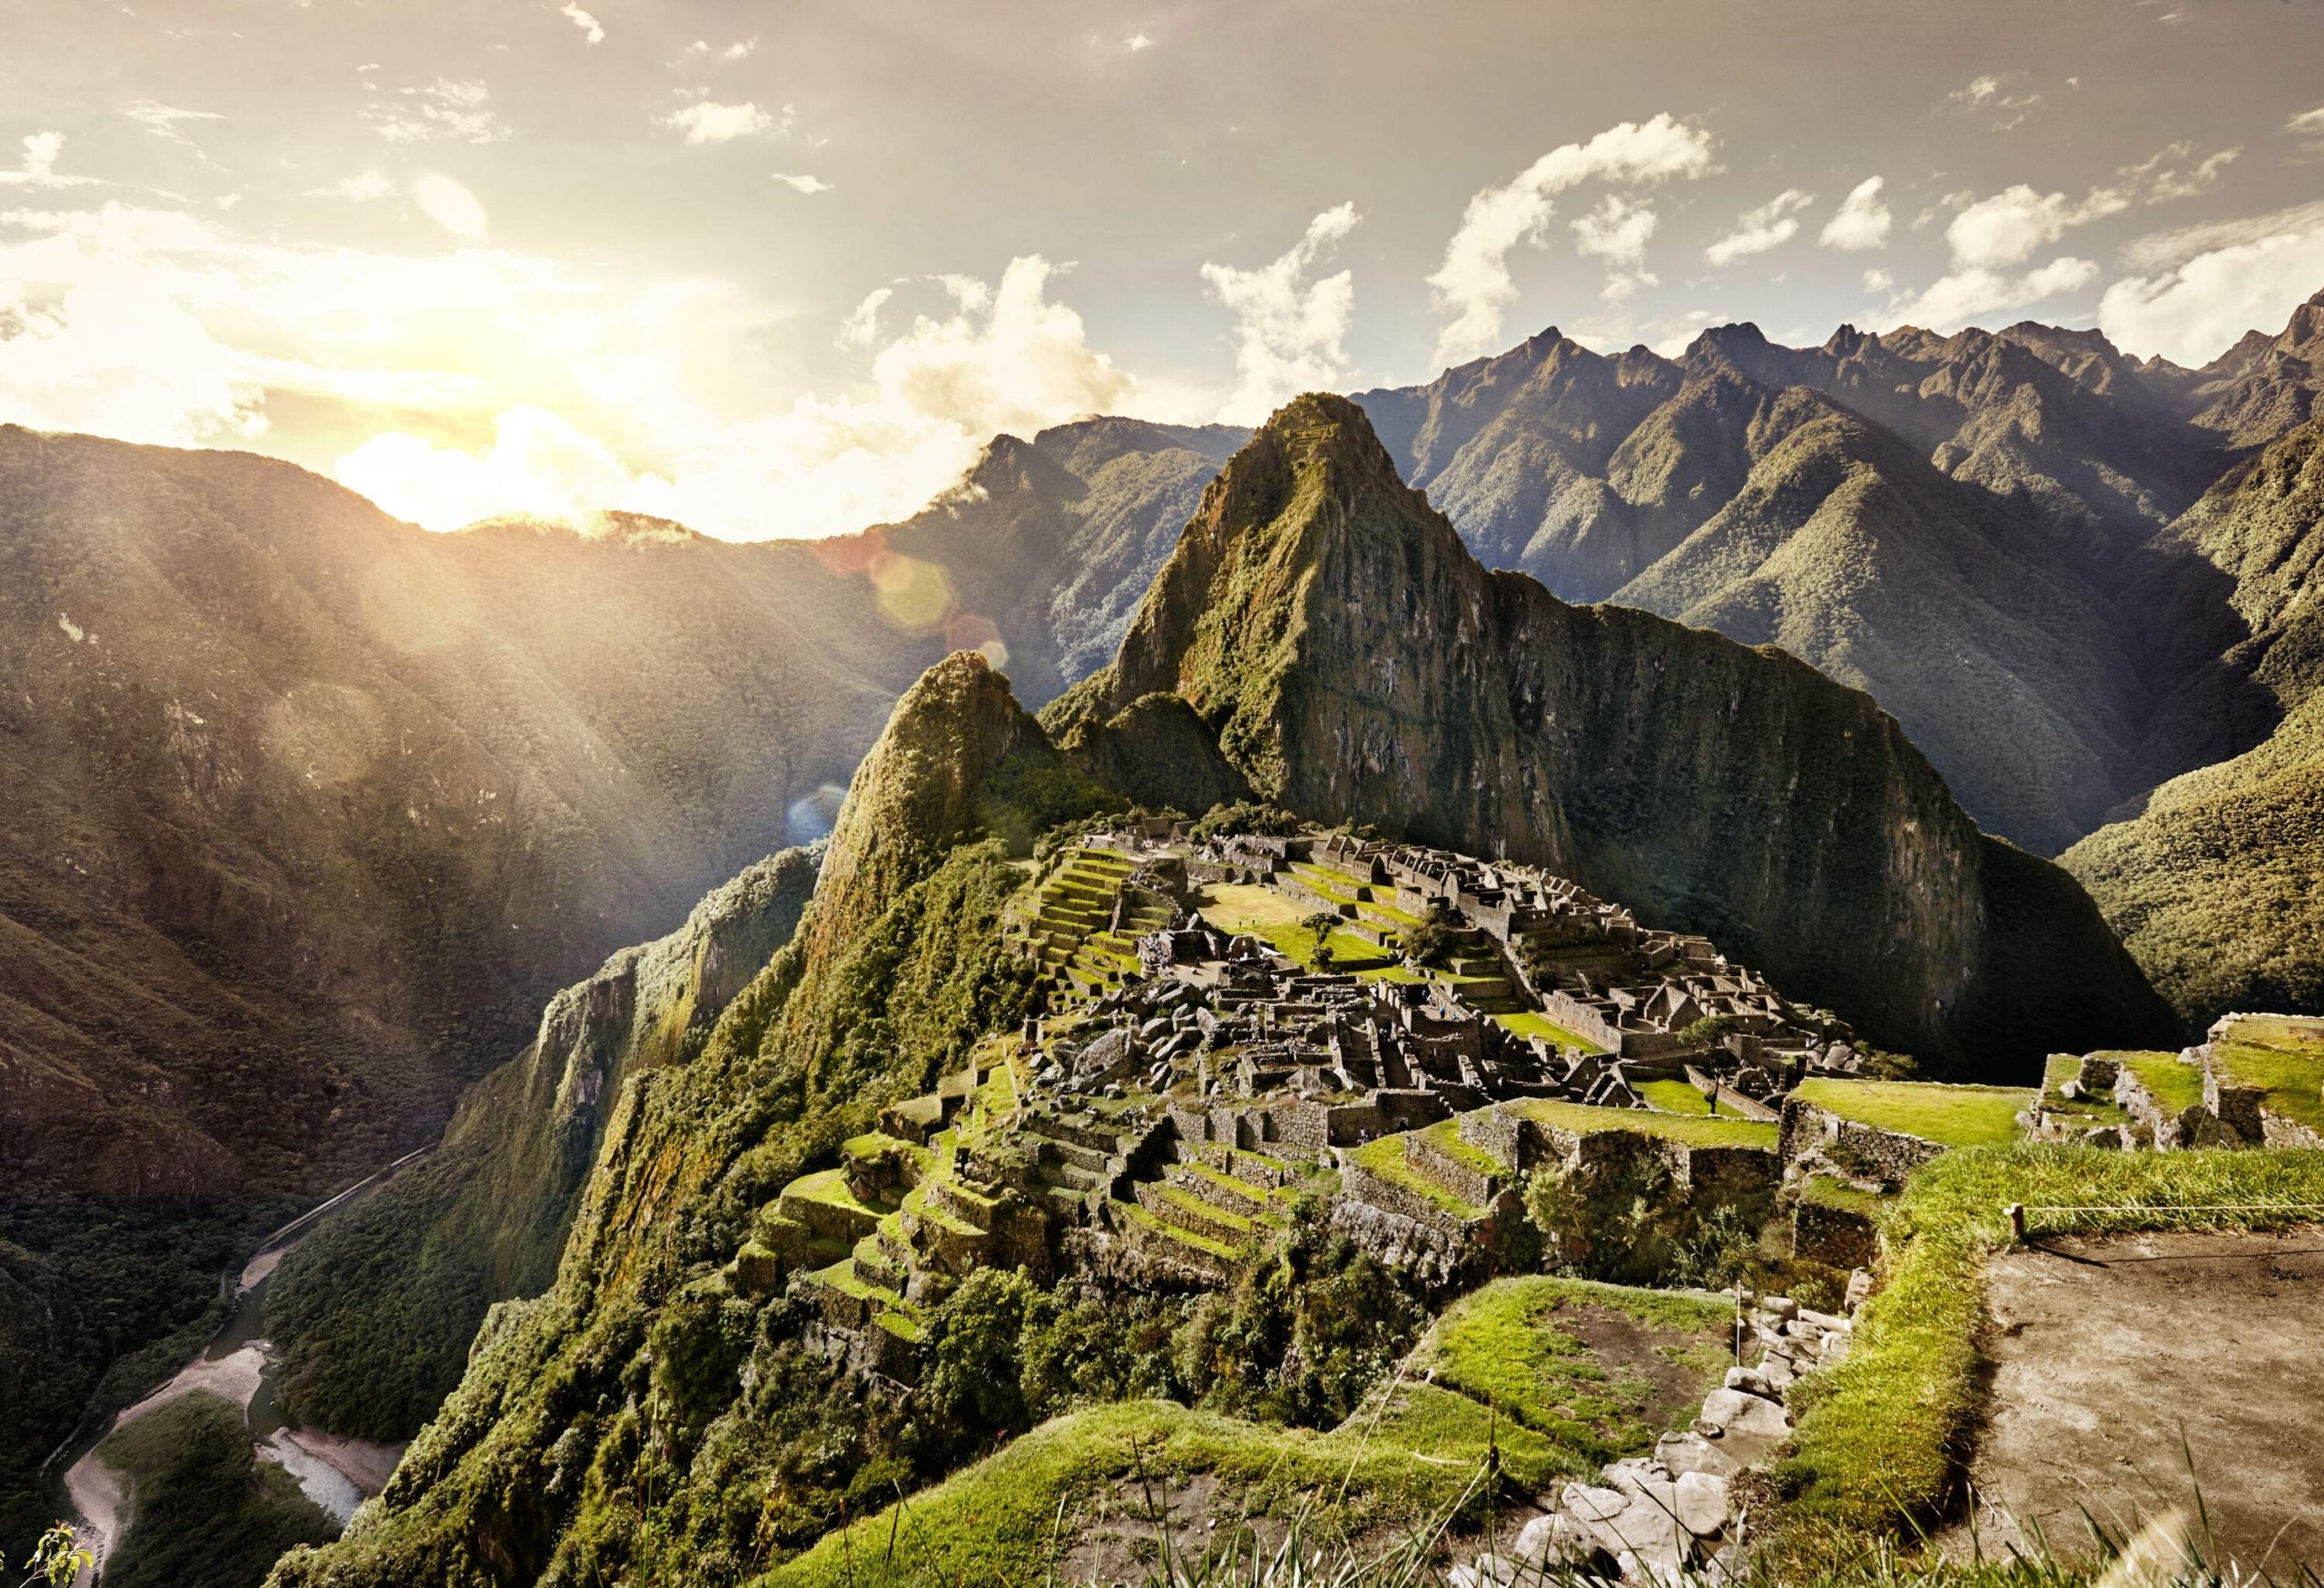 The brilliant sun bursting through the open sky, shedding light on the mountains surrounding the Machu Picchu.